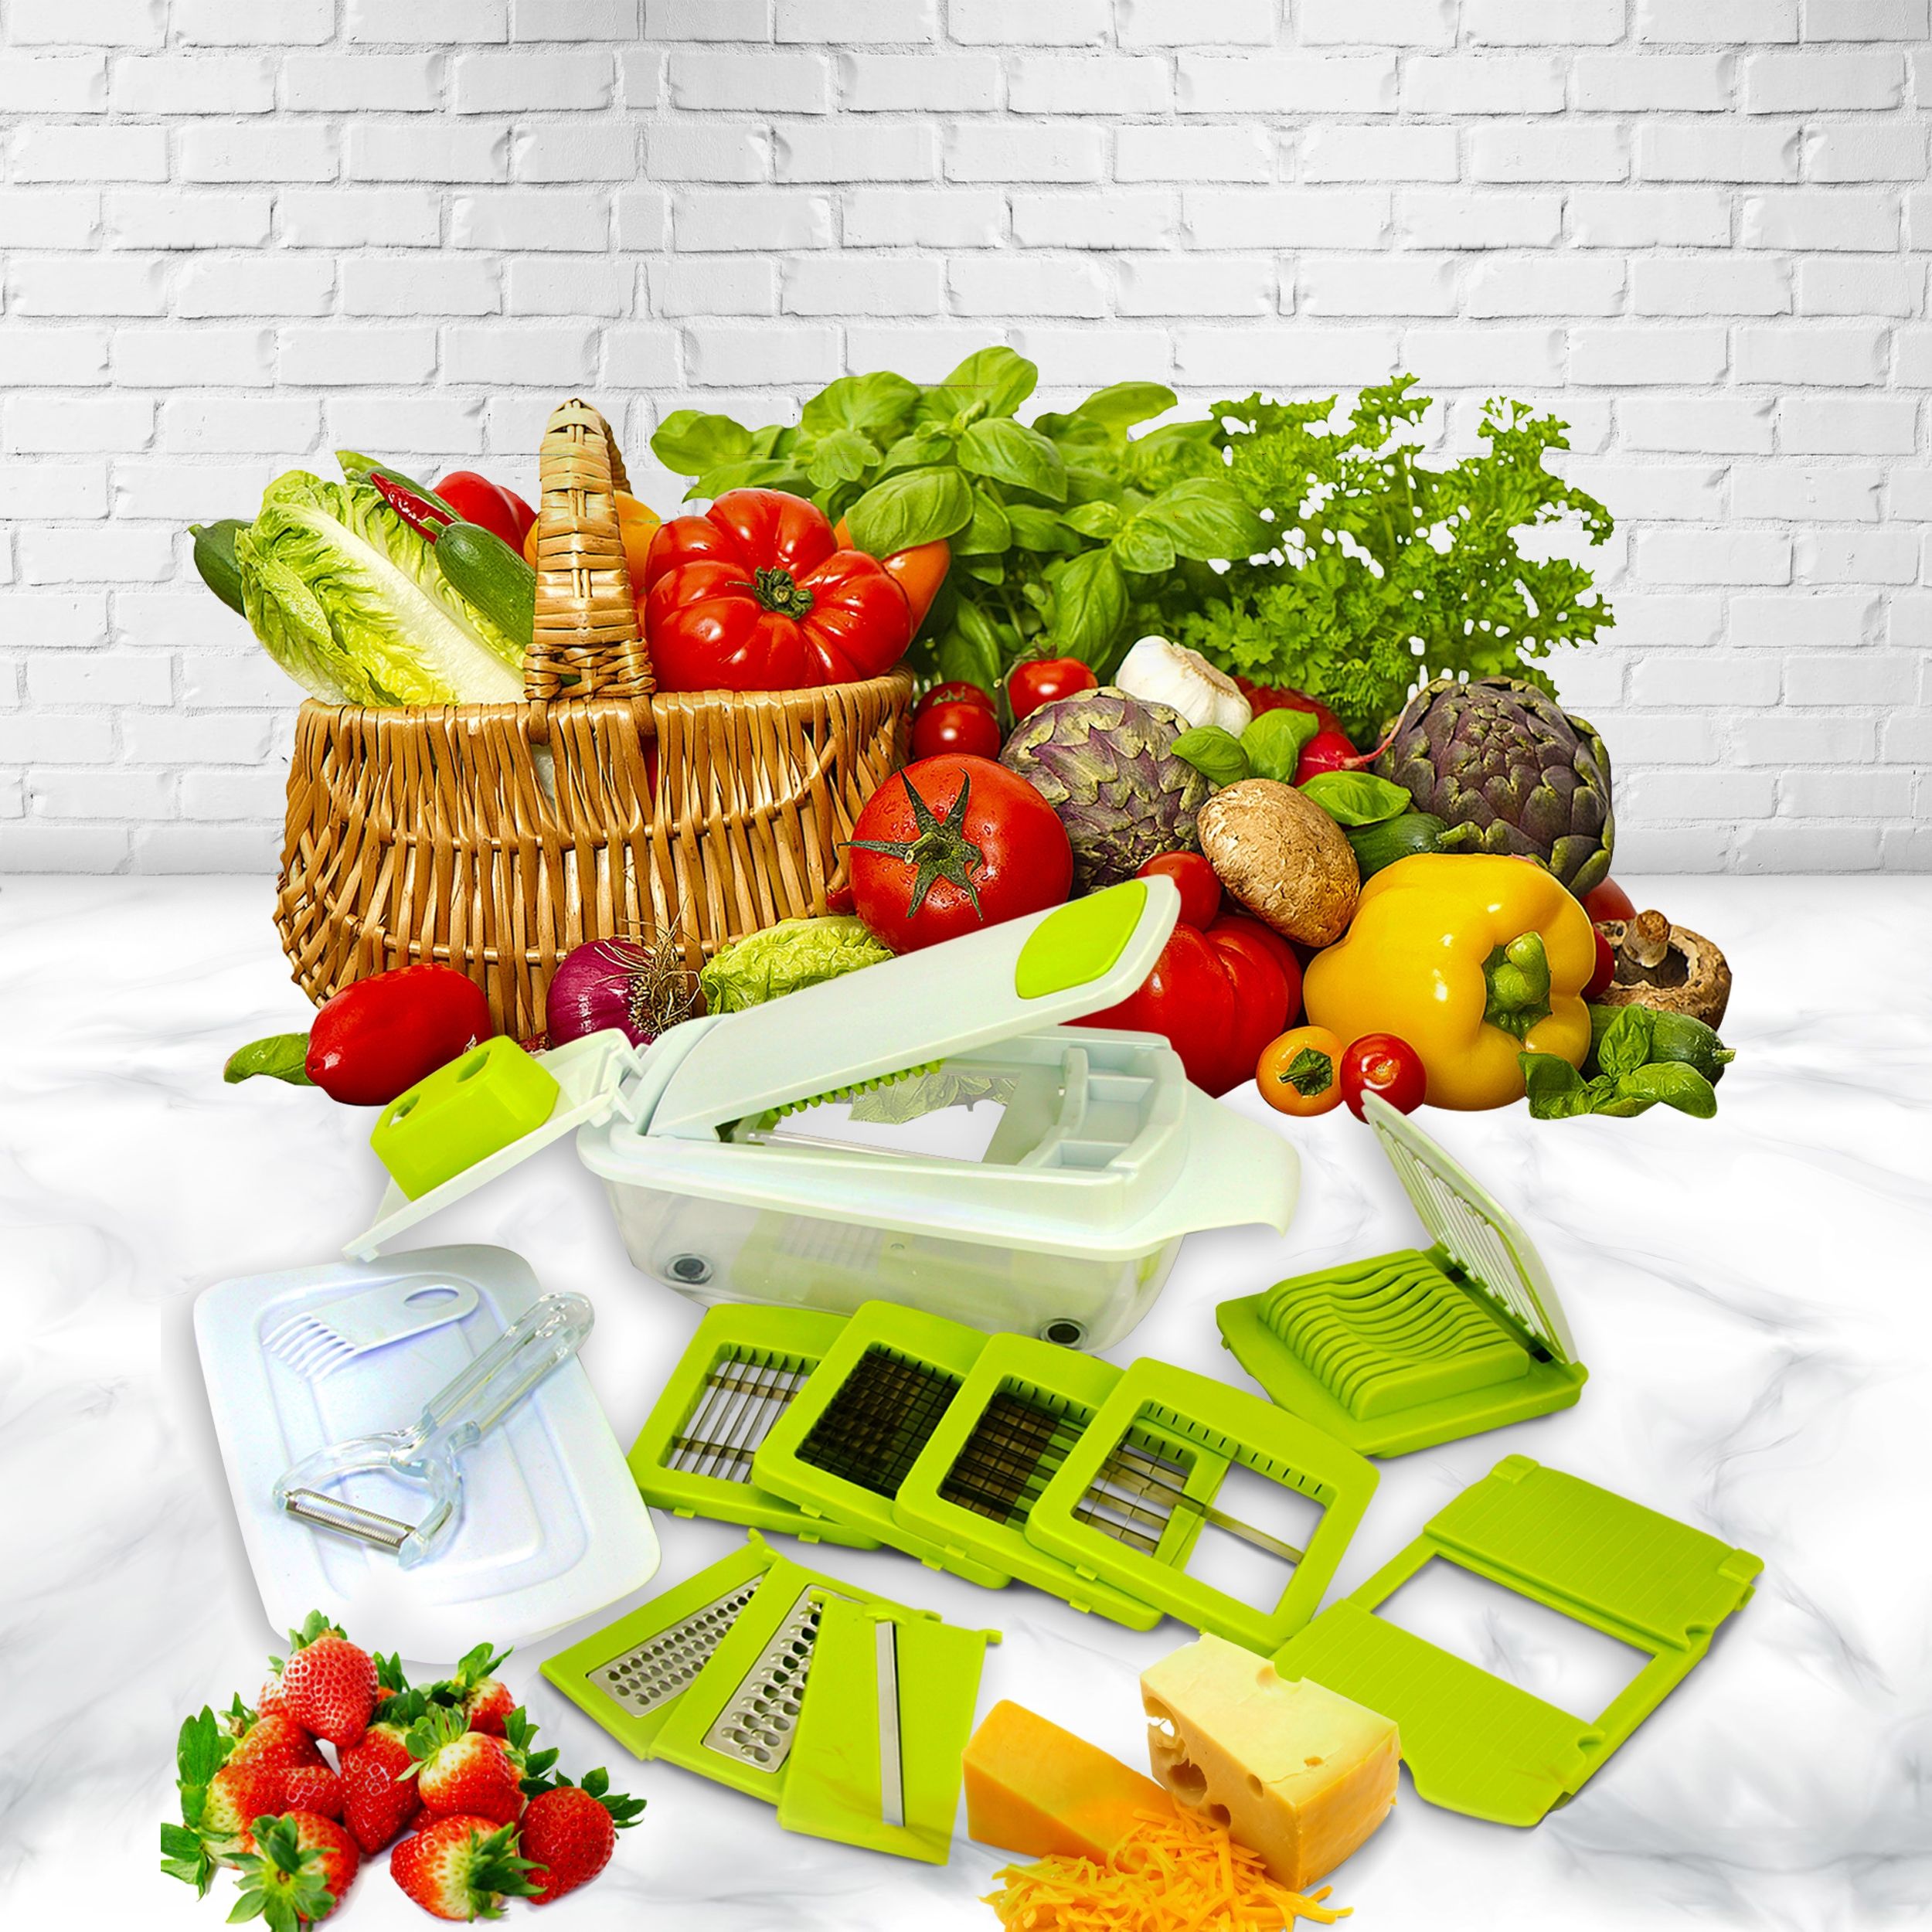 MegaChef 10-in-1 Multi-Use Salad Spinning Slicer, Dicer and